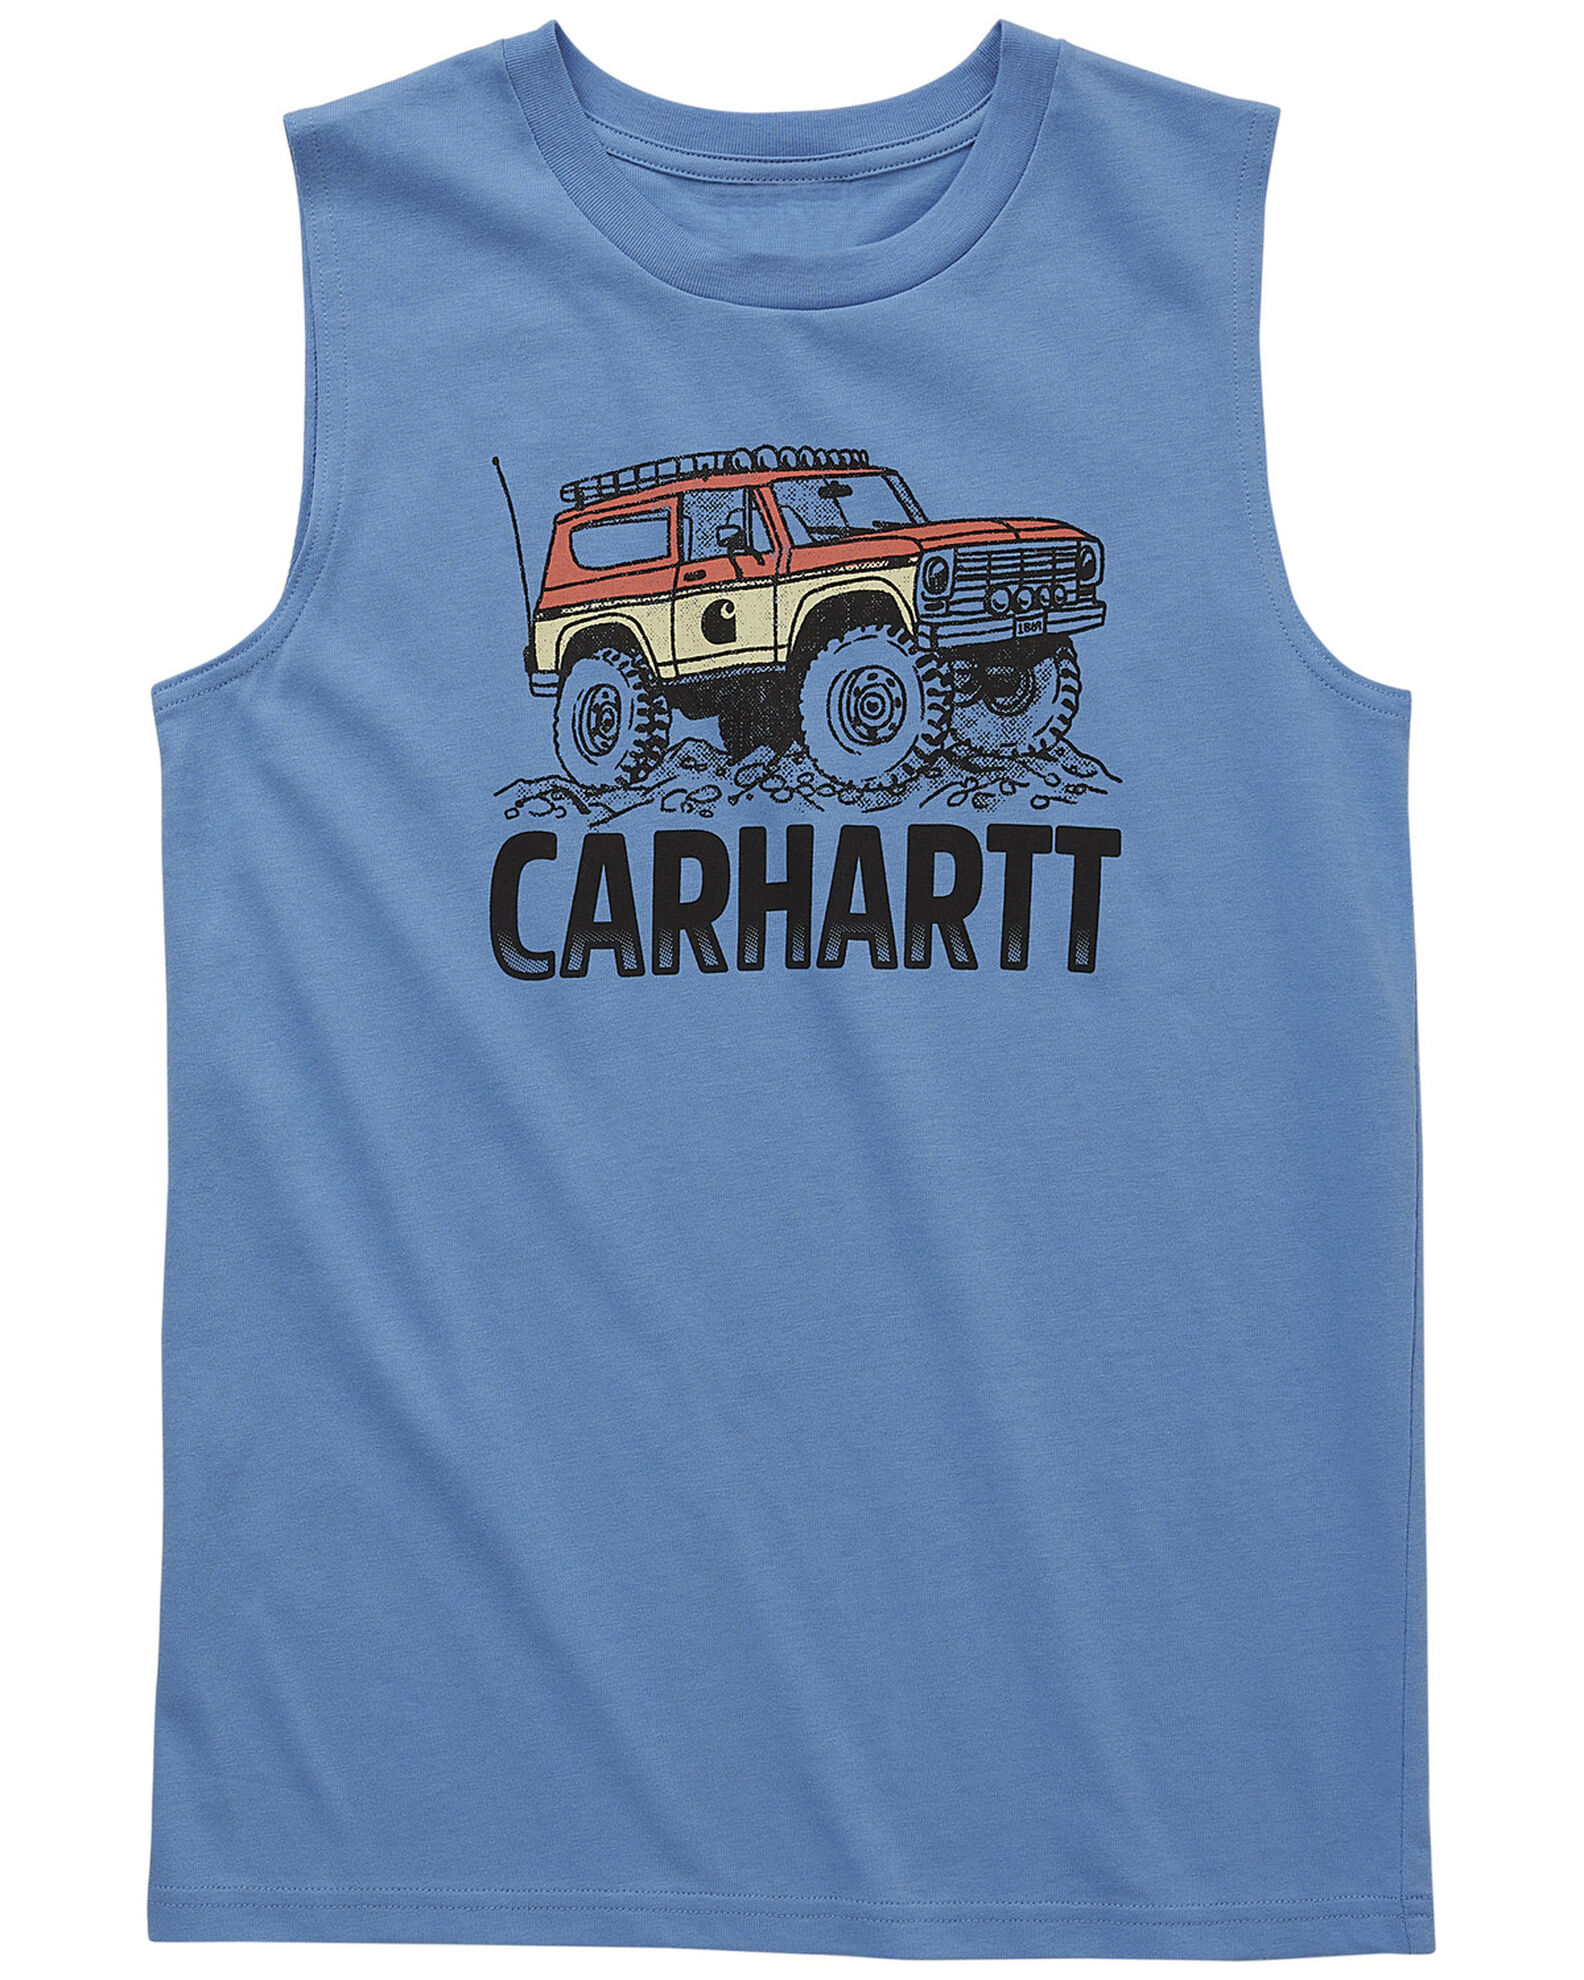 Carhartt Toddler Boys' Off Road Sleeveless T-Shirt